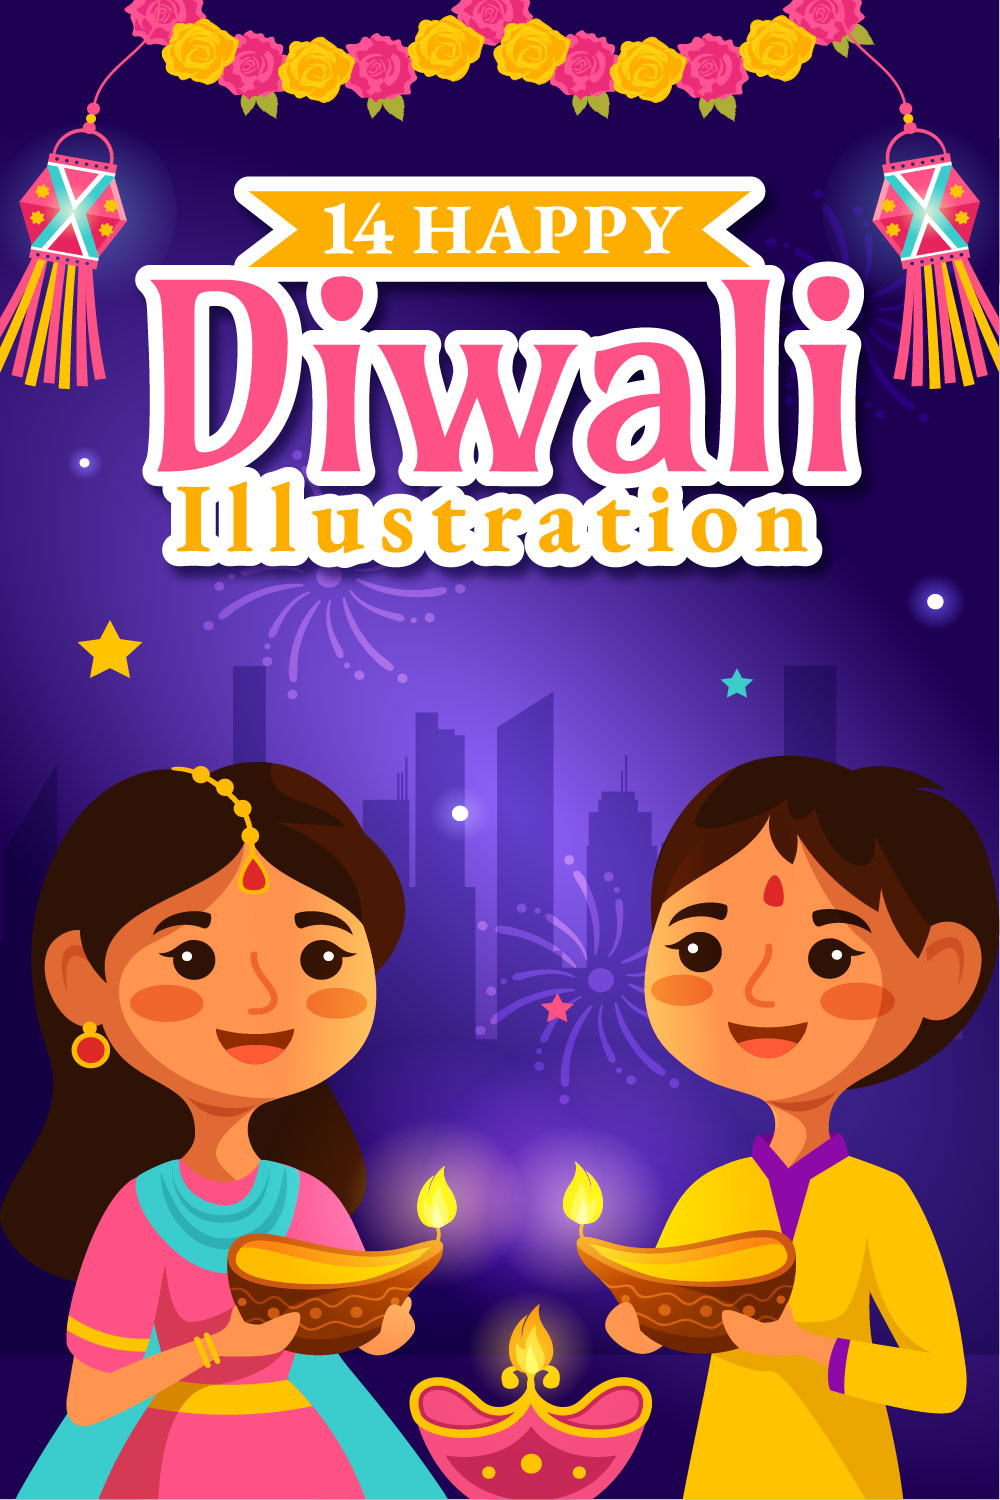 14 Happy Diwali Hindu Illustration pinterest preview image.